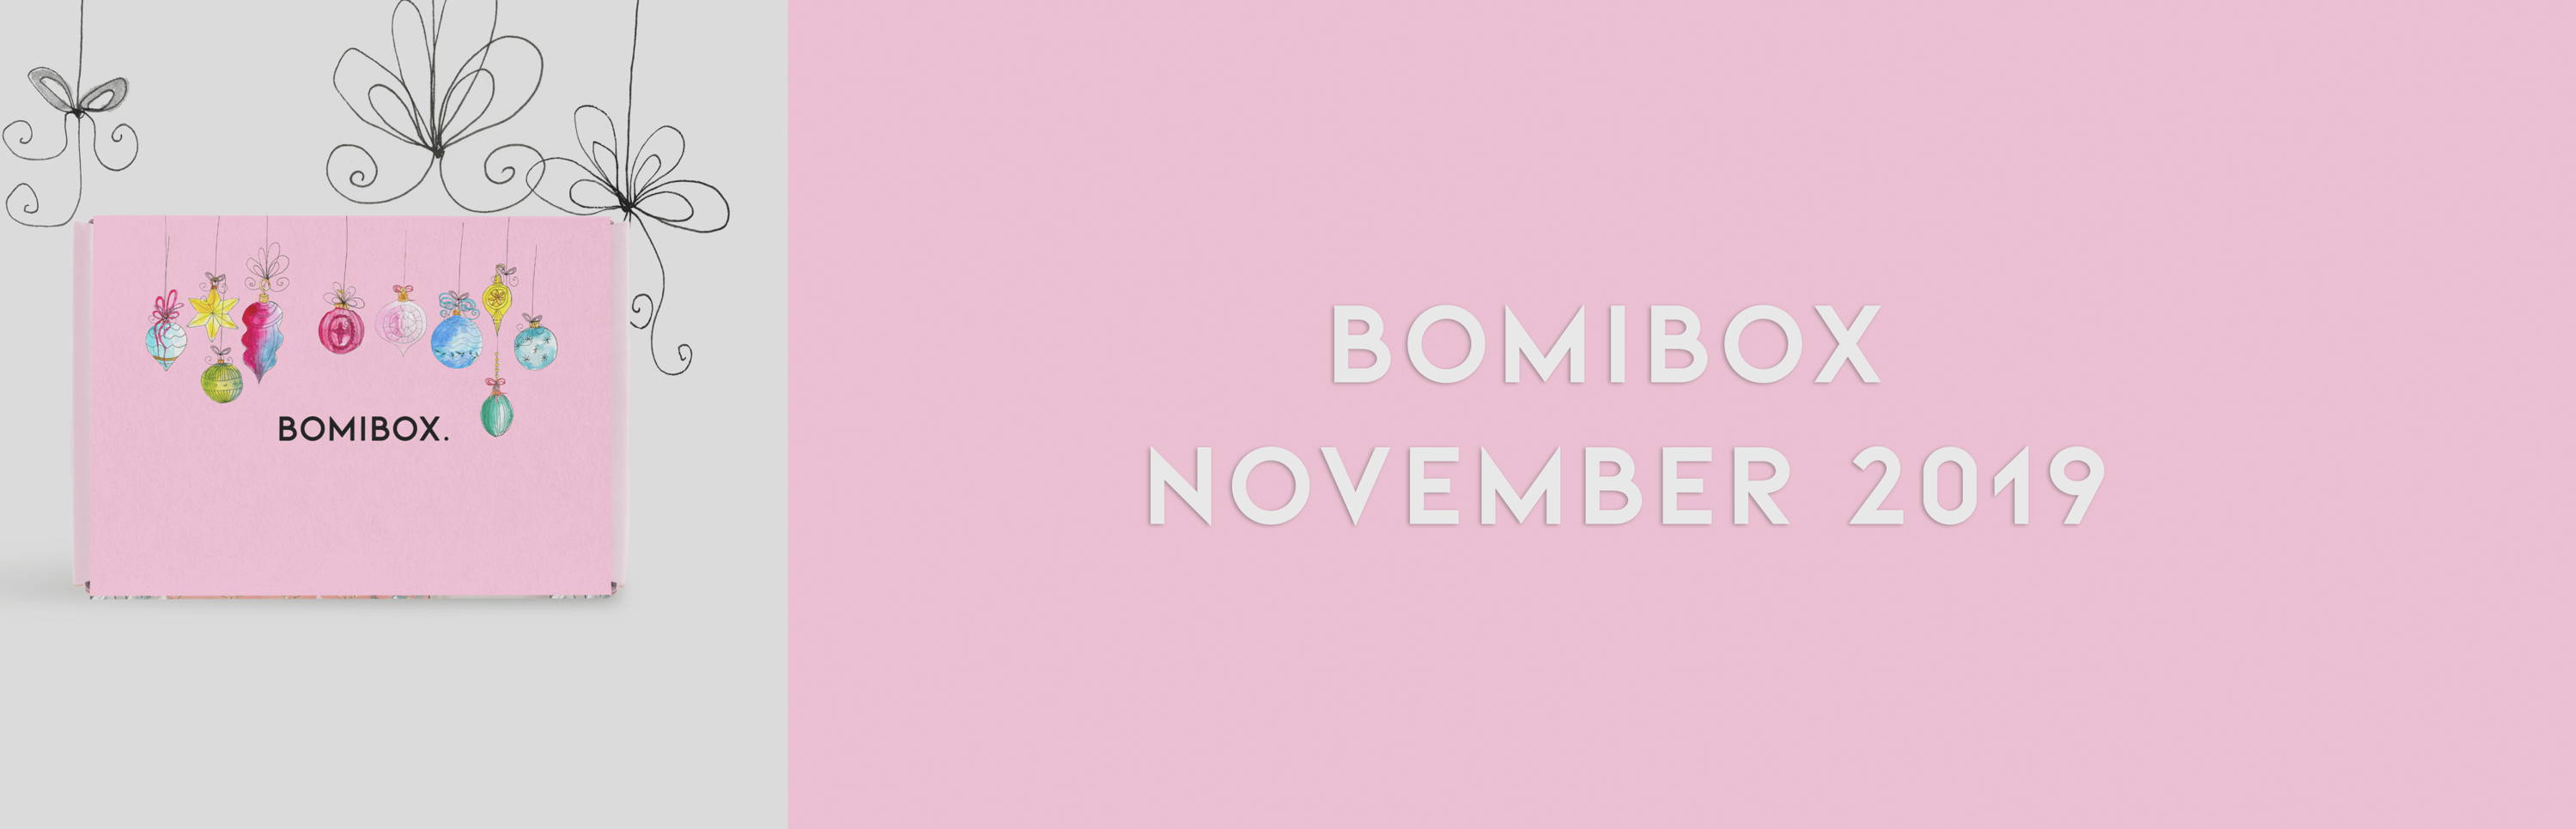 Bomibox November 2019 - Korean Beauty Box